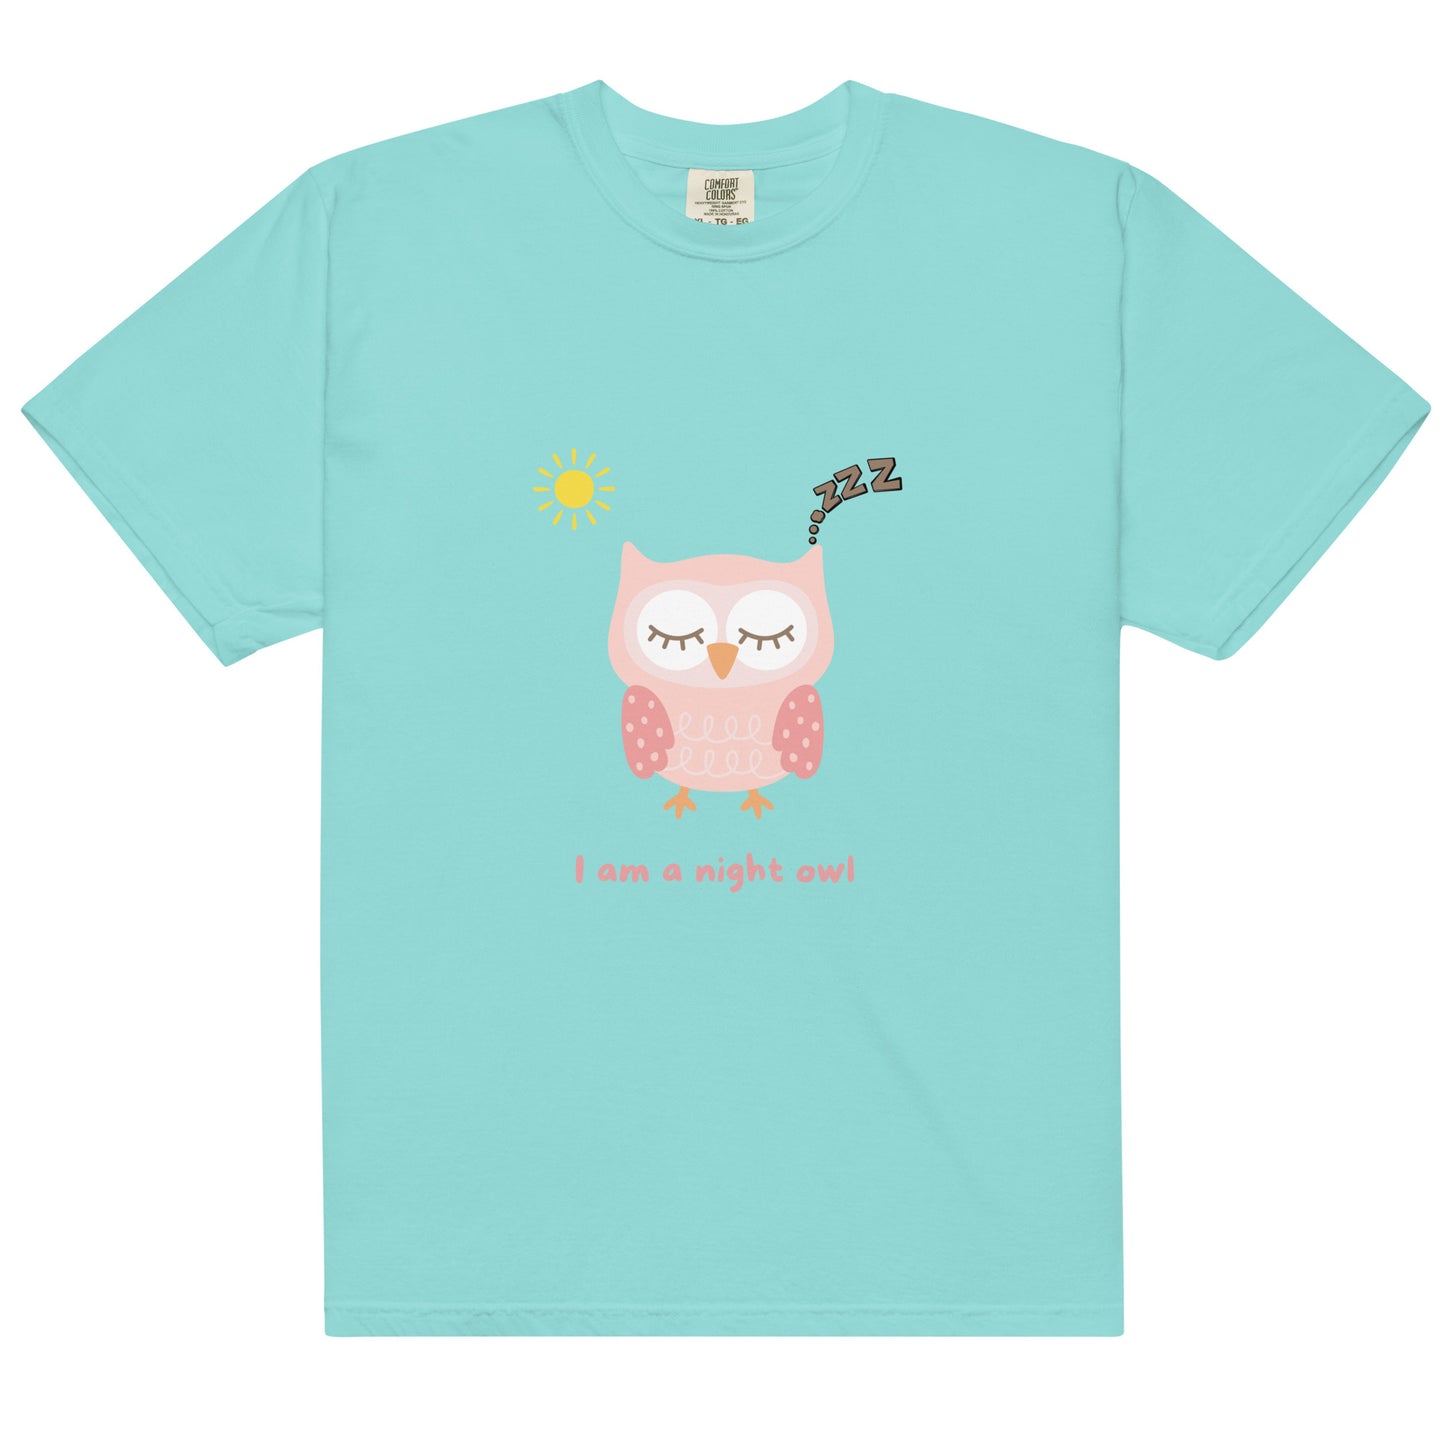 Owl, Cute, Adorable, Sleepy, Soft, Cuddly, Animal Lover, Nature, Peaceful, Animal, Unisex, T-shirt